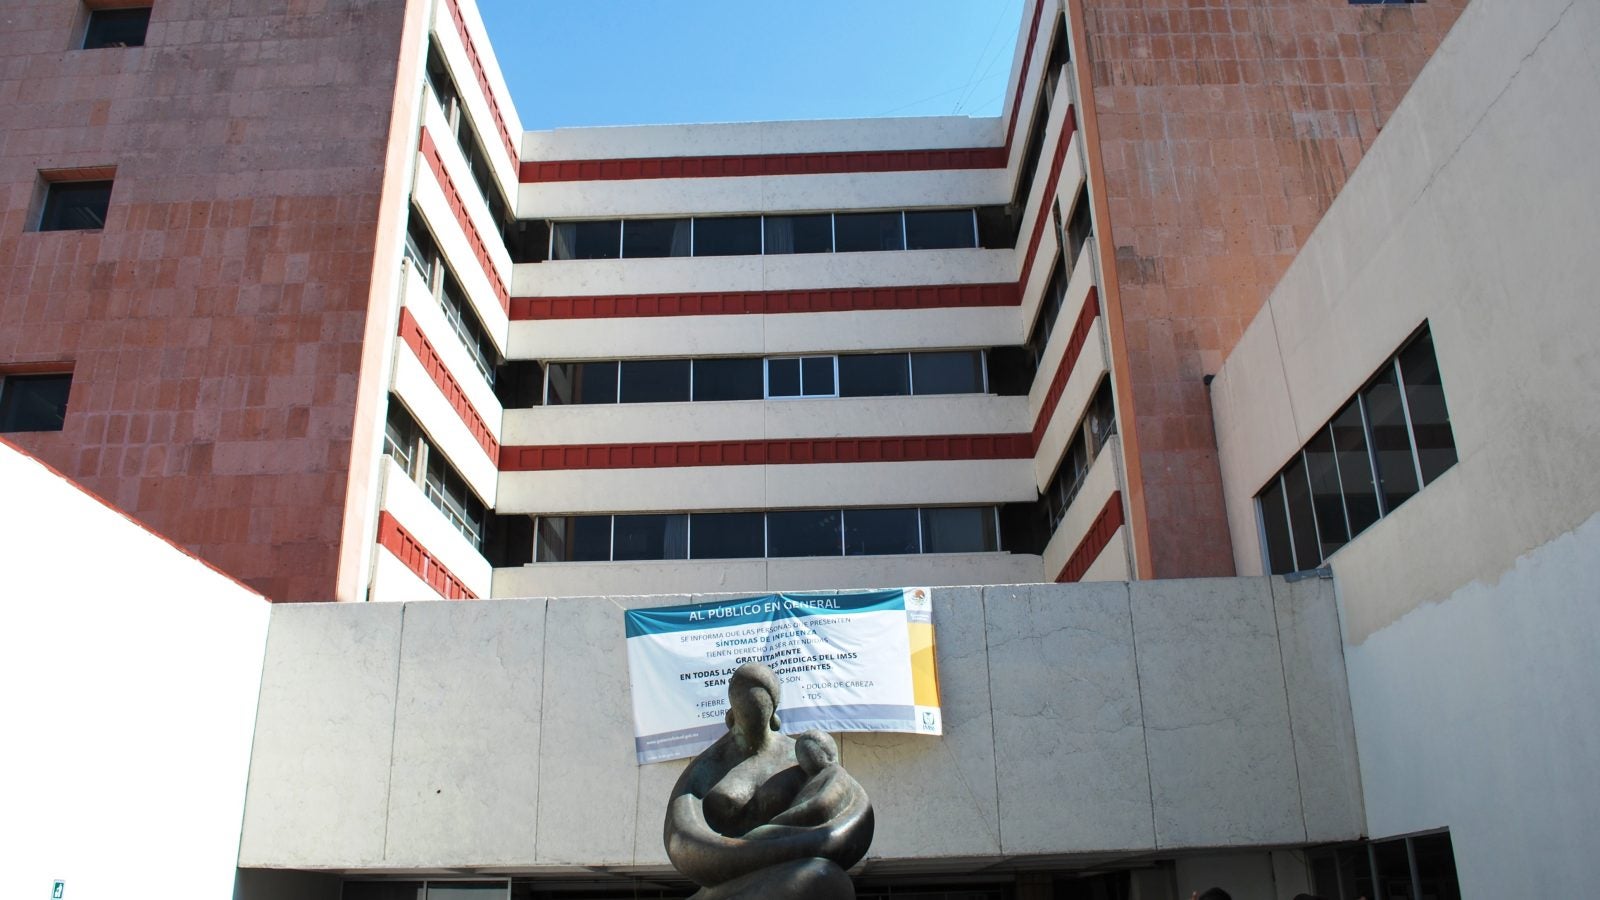 Los Venados public hospital located on Municipio Libre and Dr Vertiz streets in the Benito Juarez borough of Mexico City